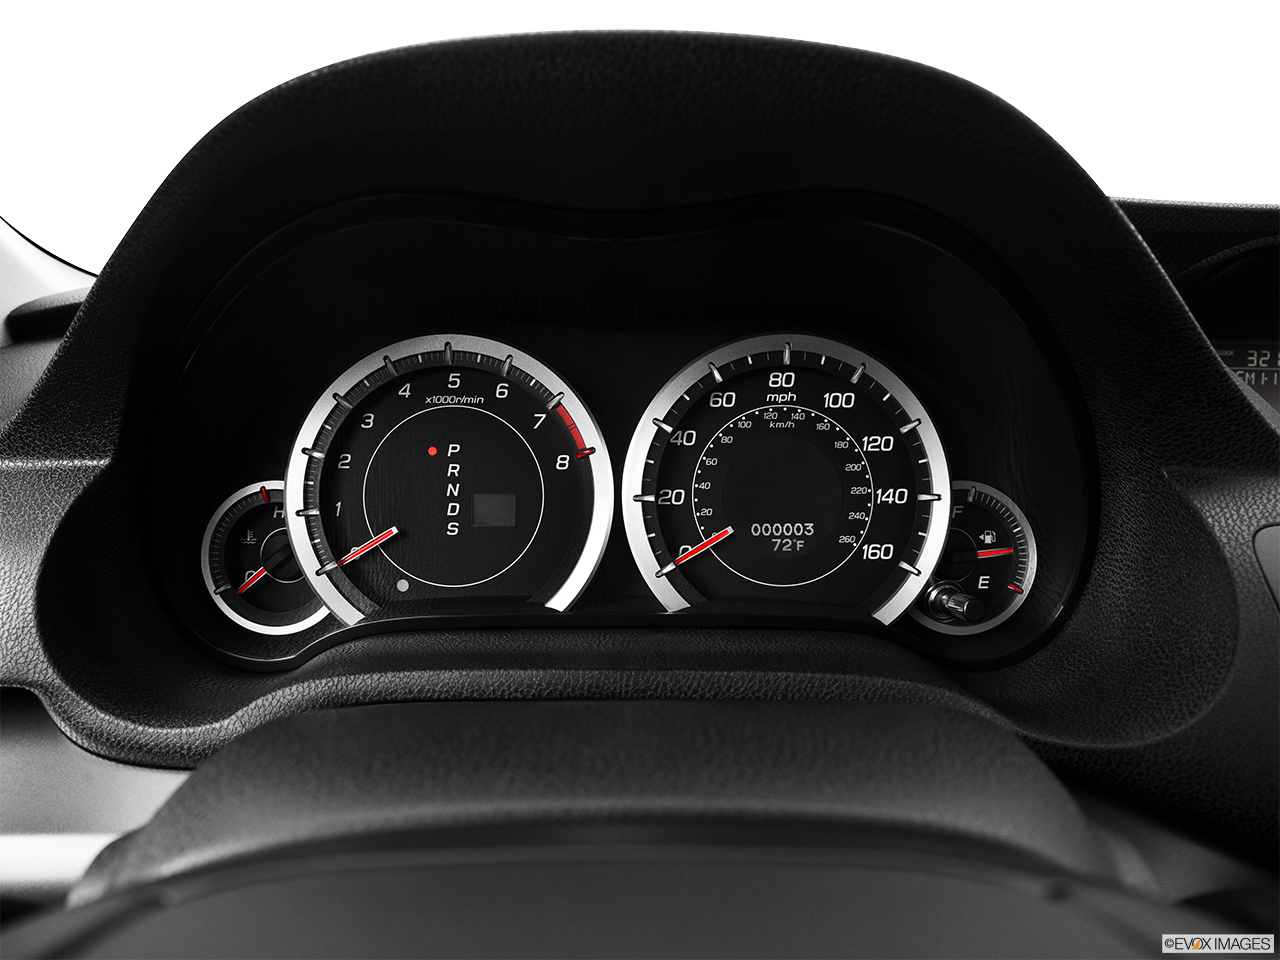 2013 Acura TSX 5-speed Automatic Speedometer/tachometer. 